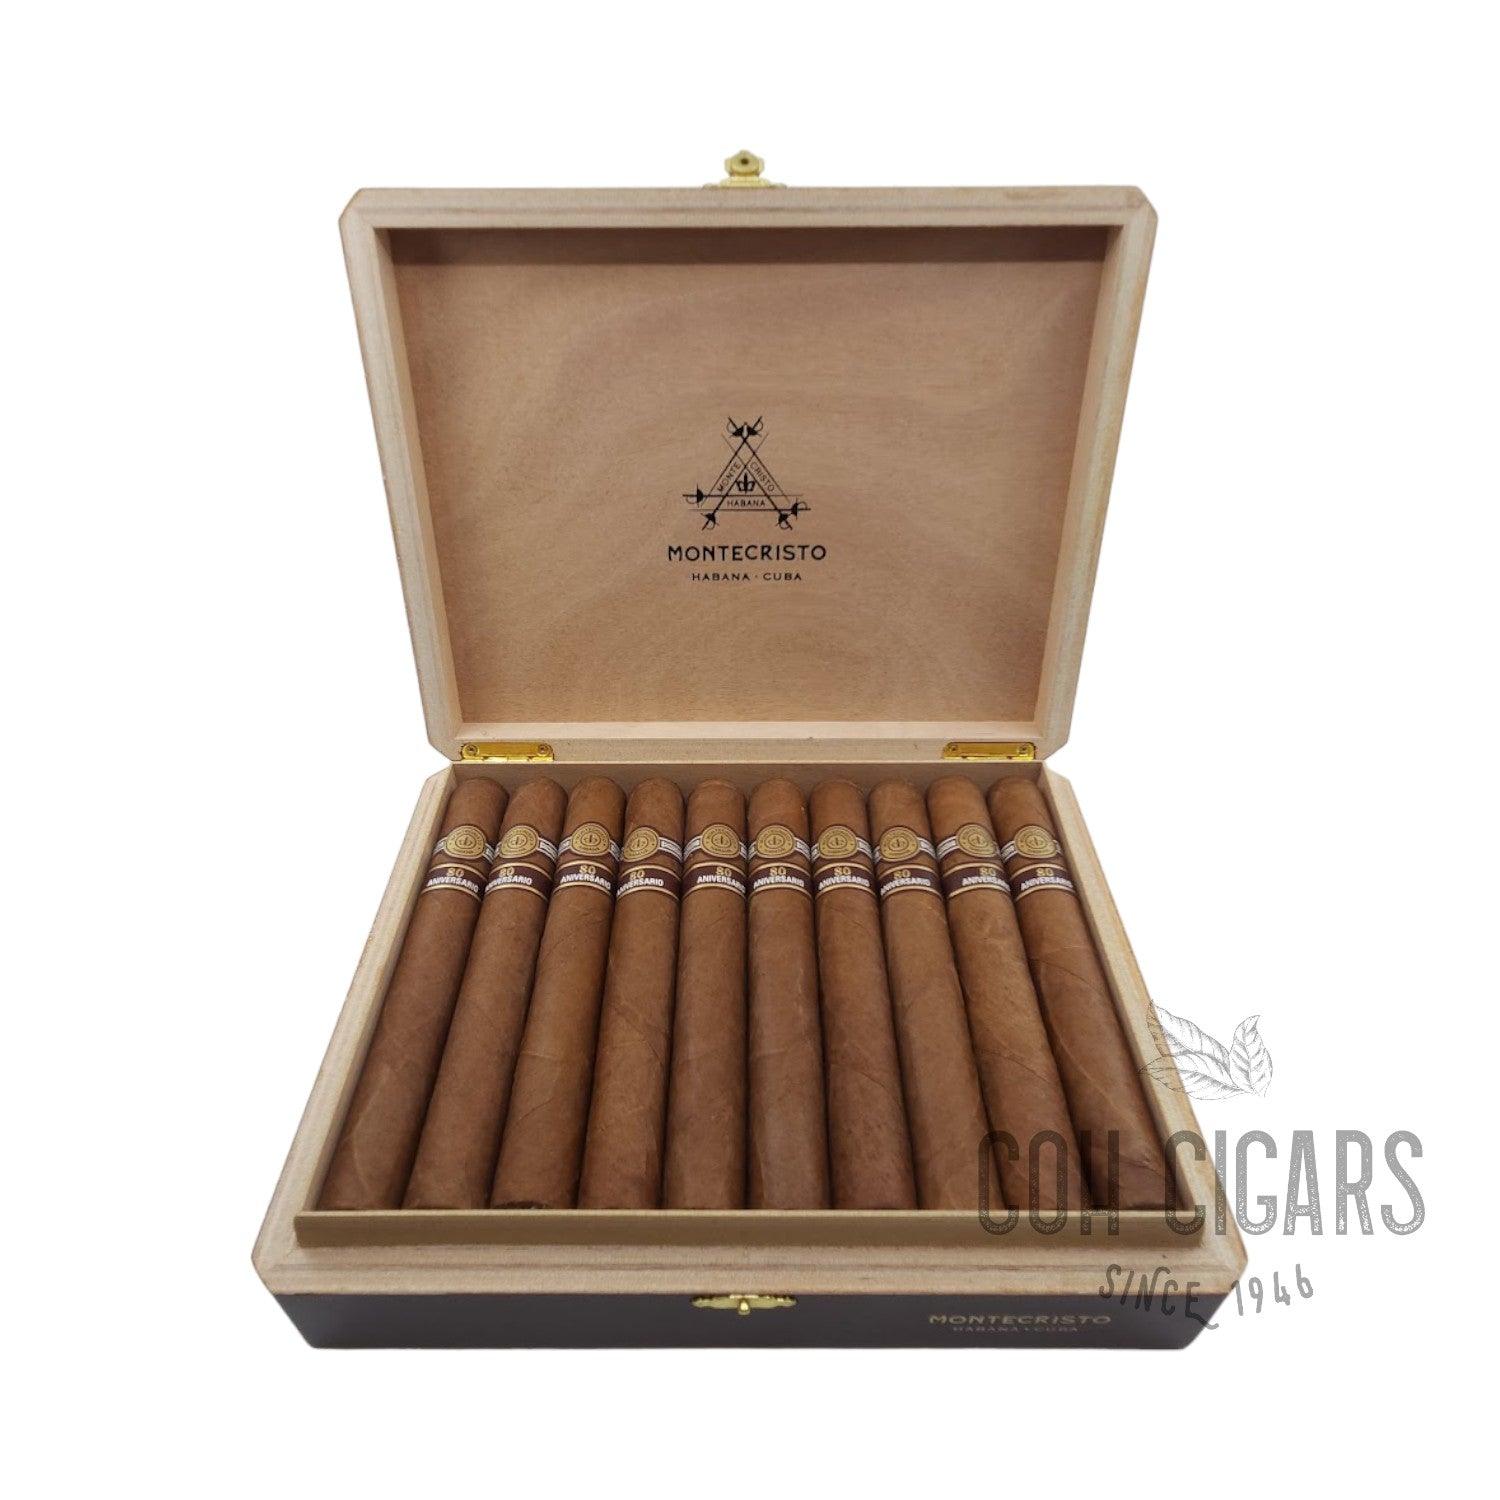 Montecristo Cigar | 80 Aniversario | Box 20 - hk.cohcigars